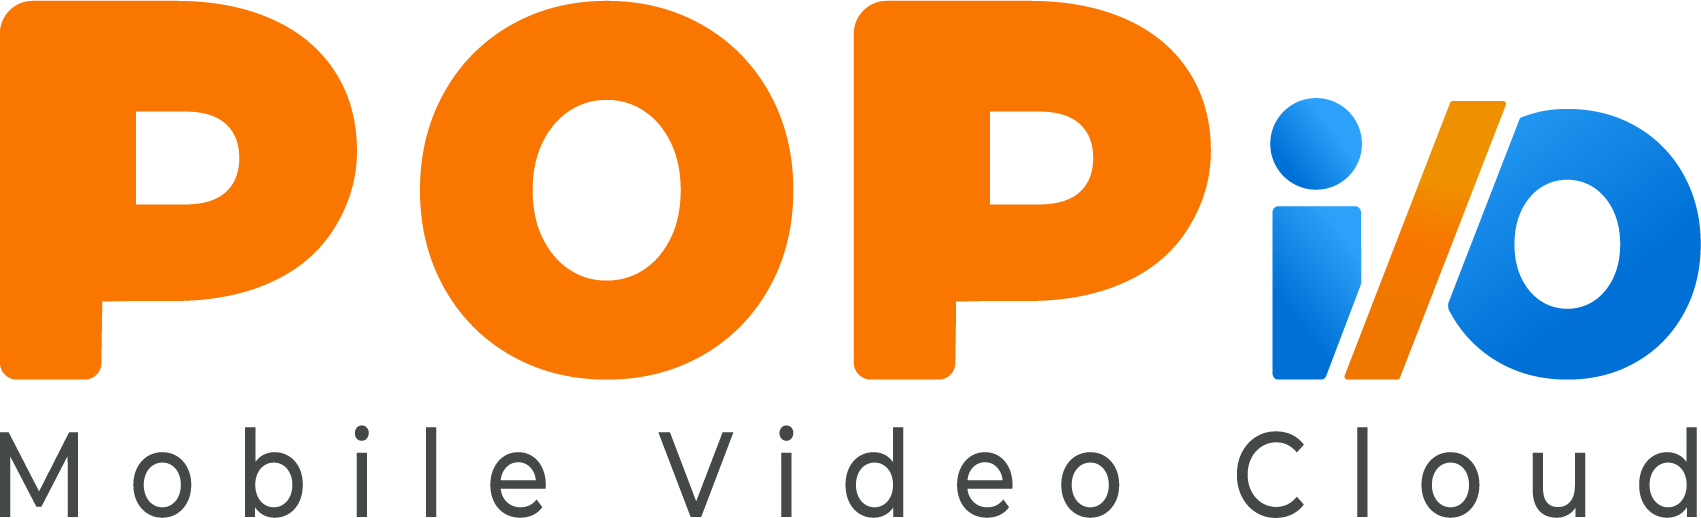 POPi/o Mobile Video Cloud logo